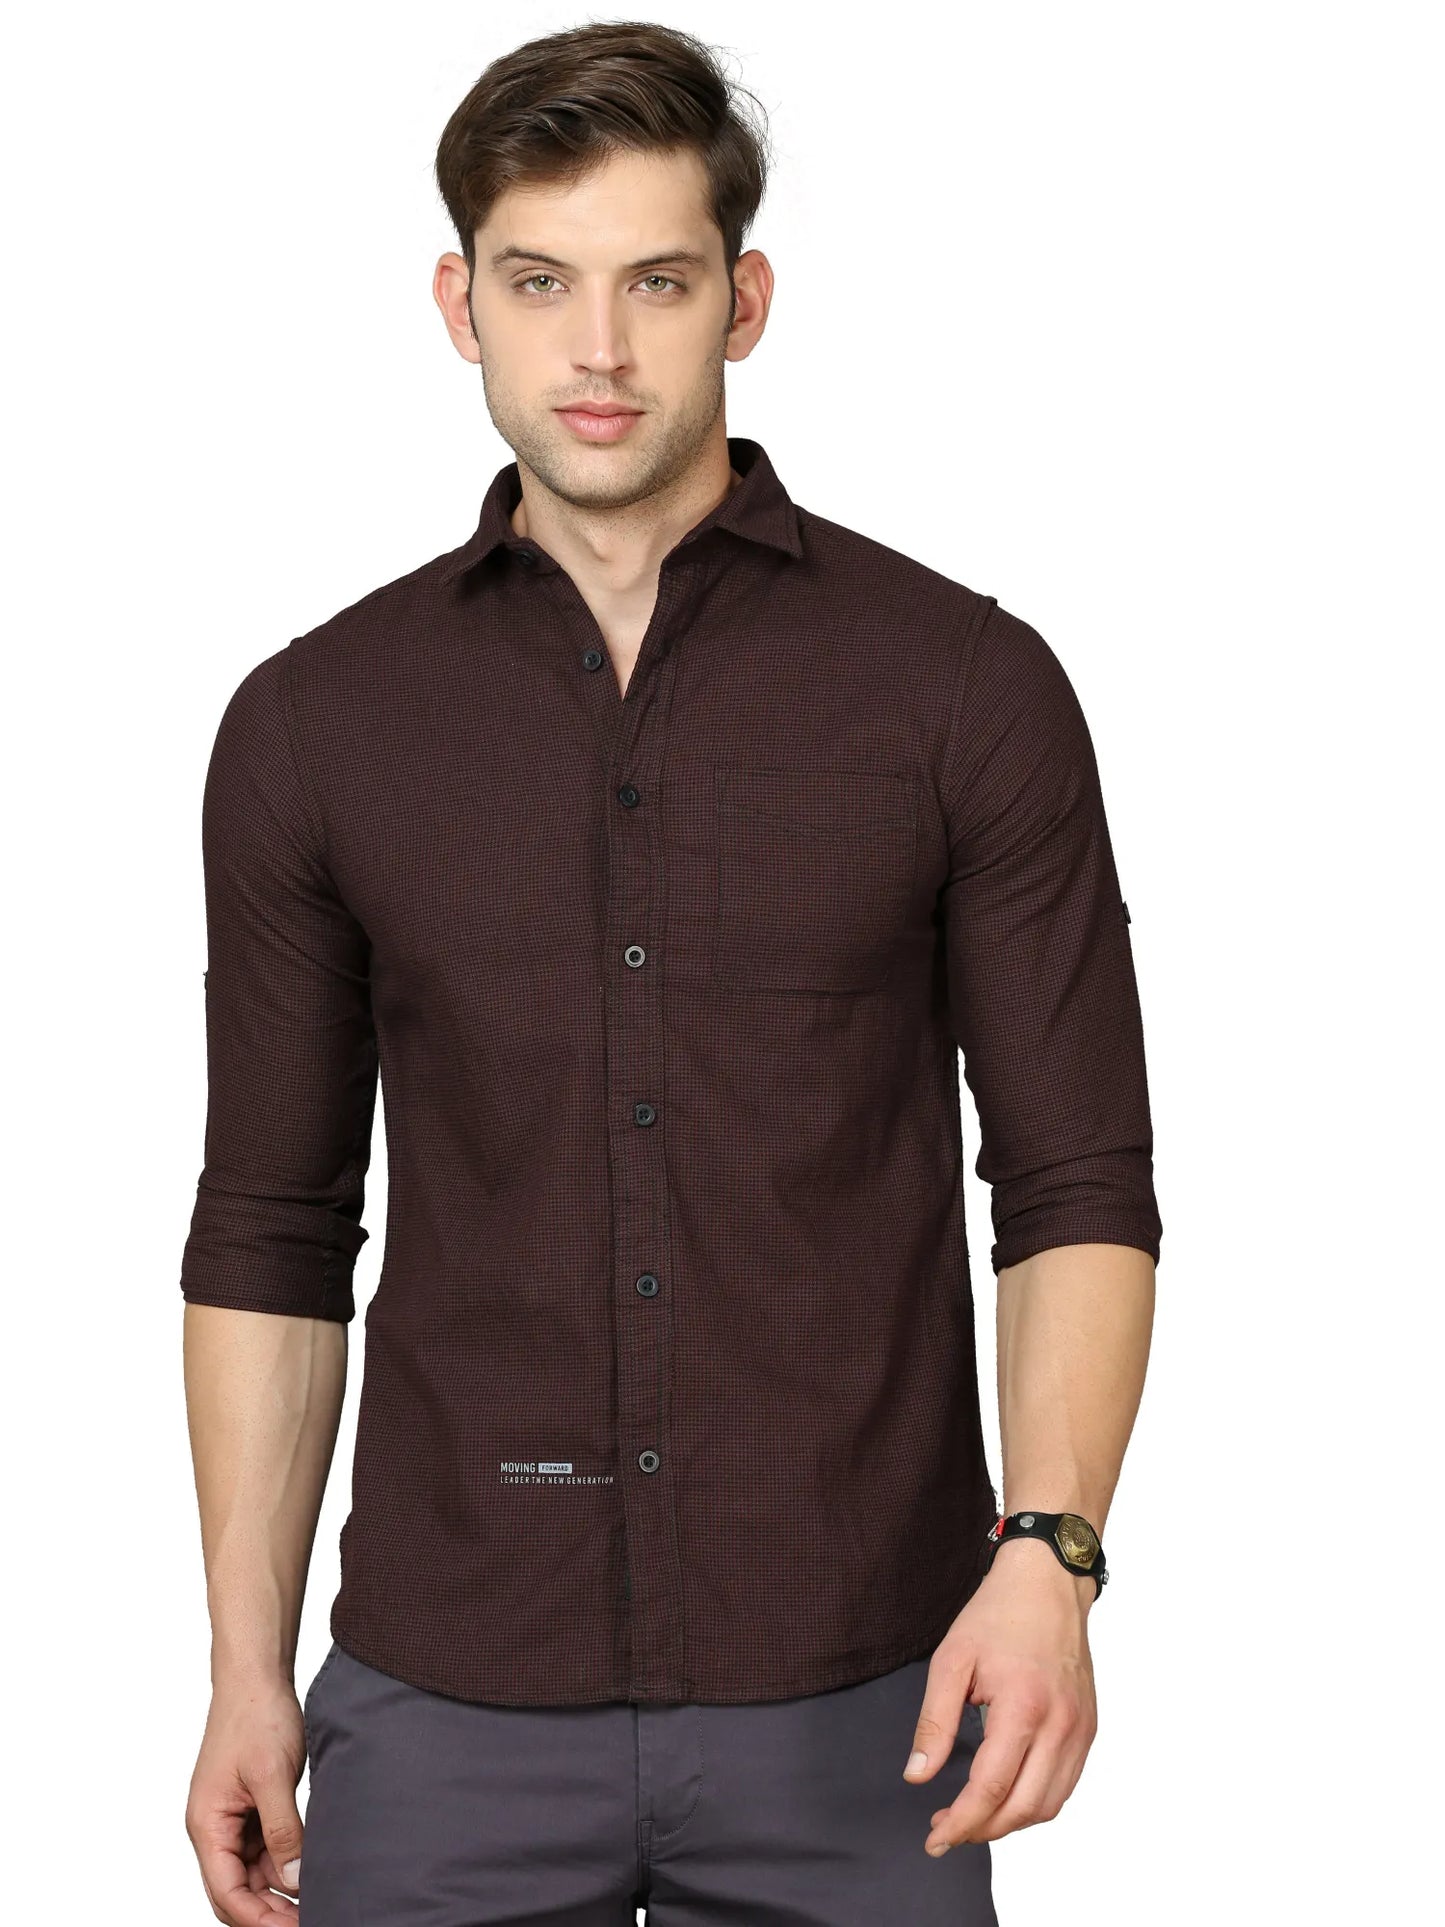 Maroon Checkered Shirt for Men 